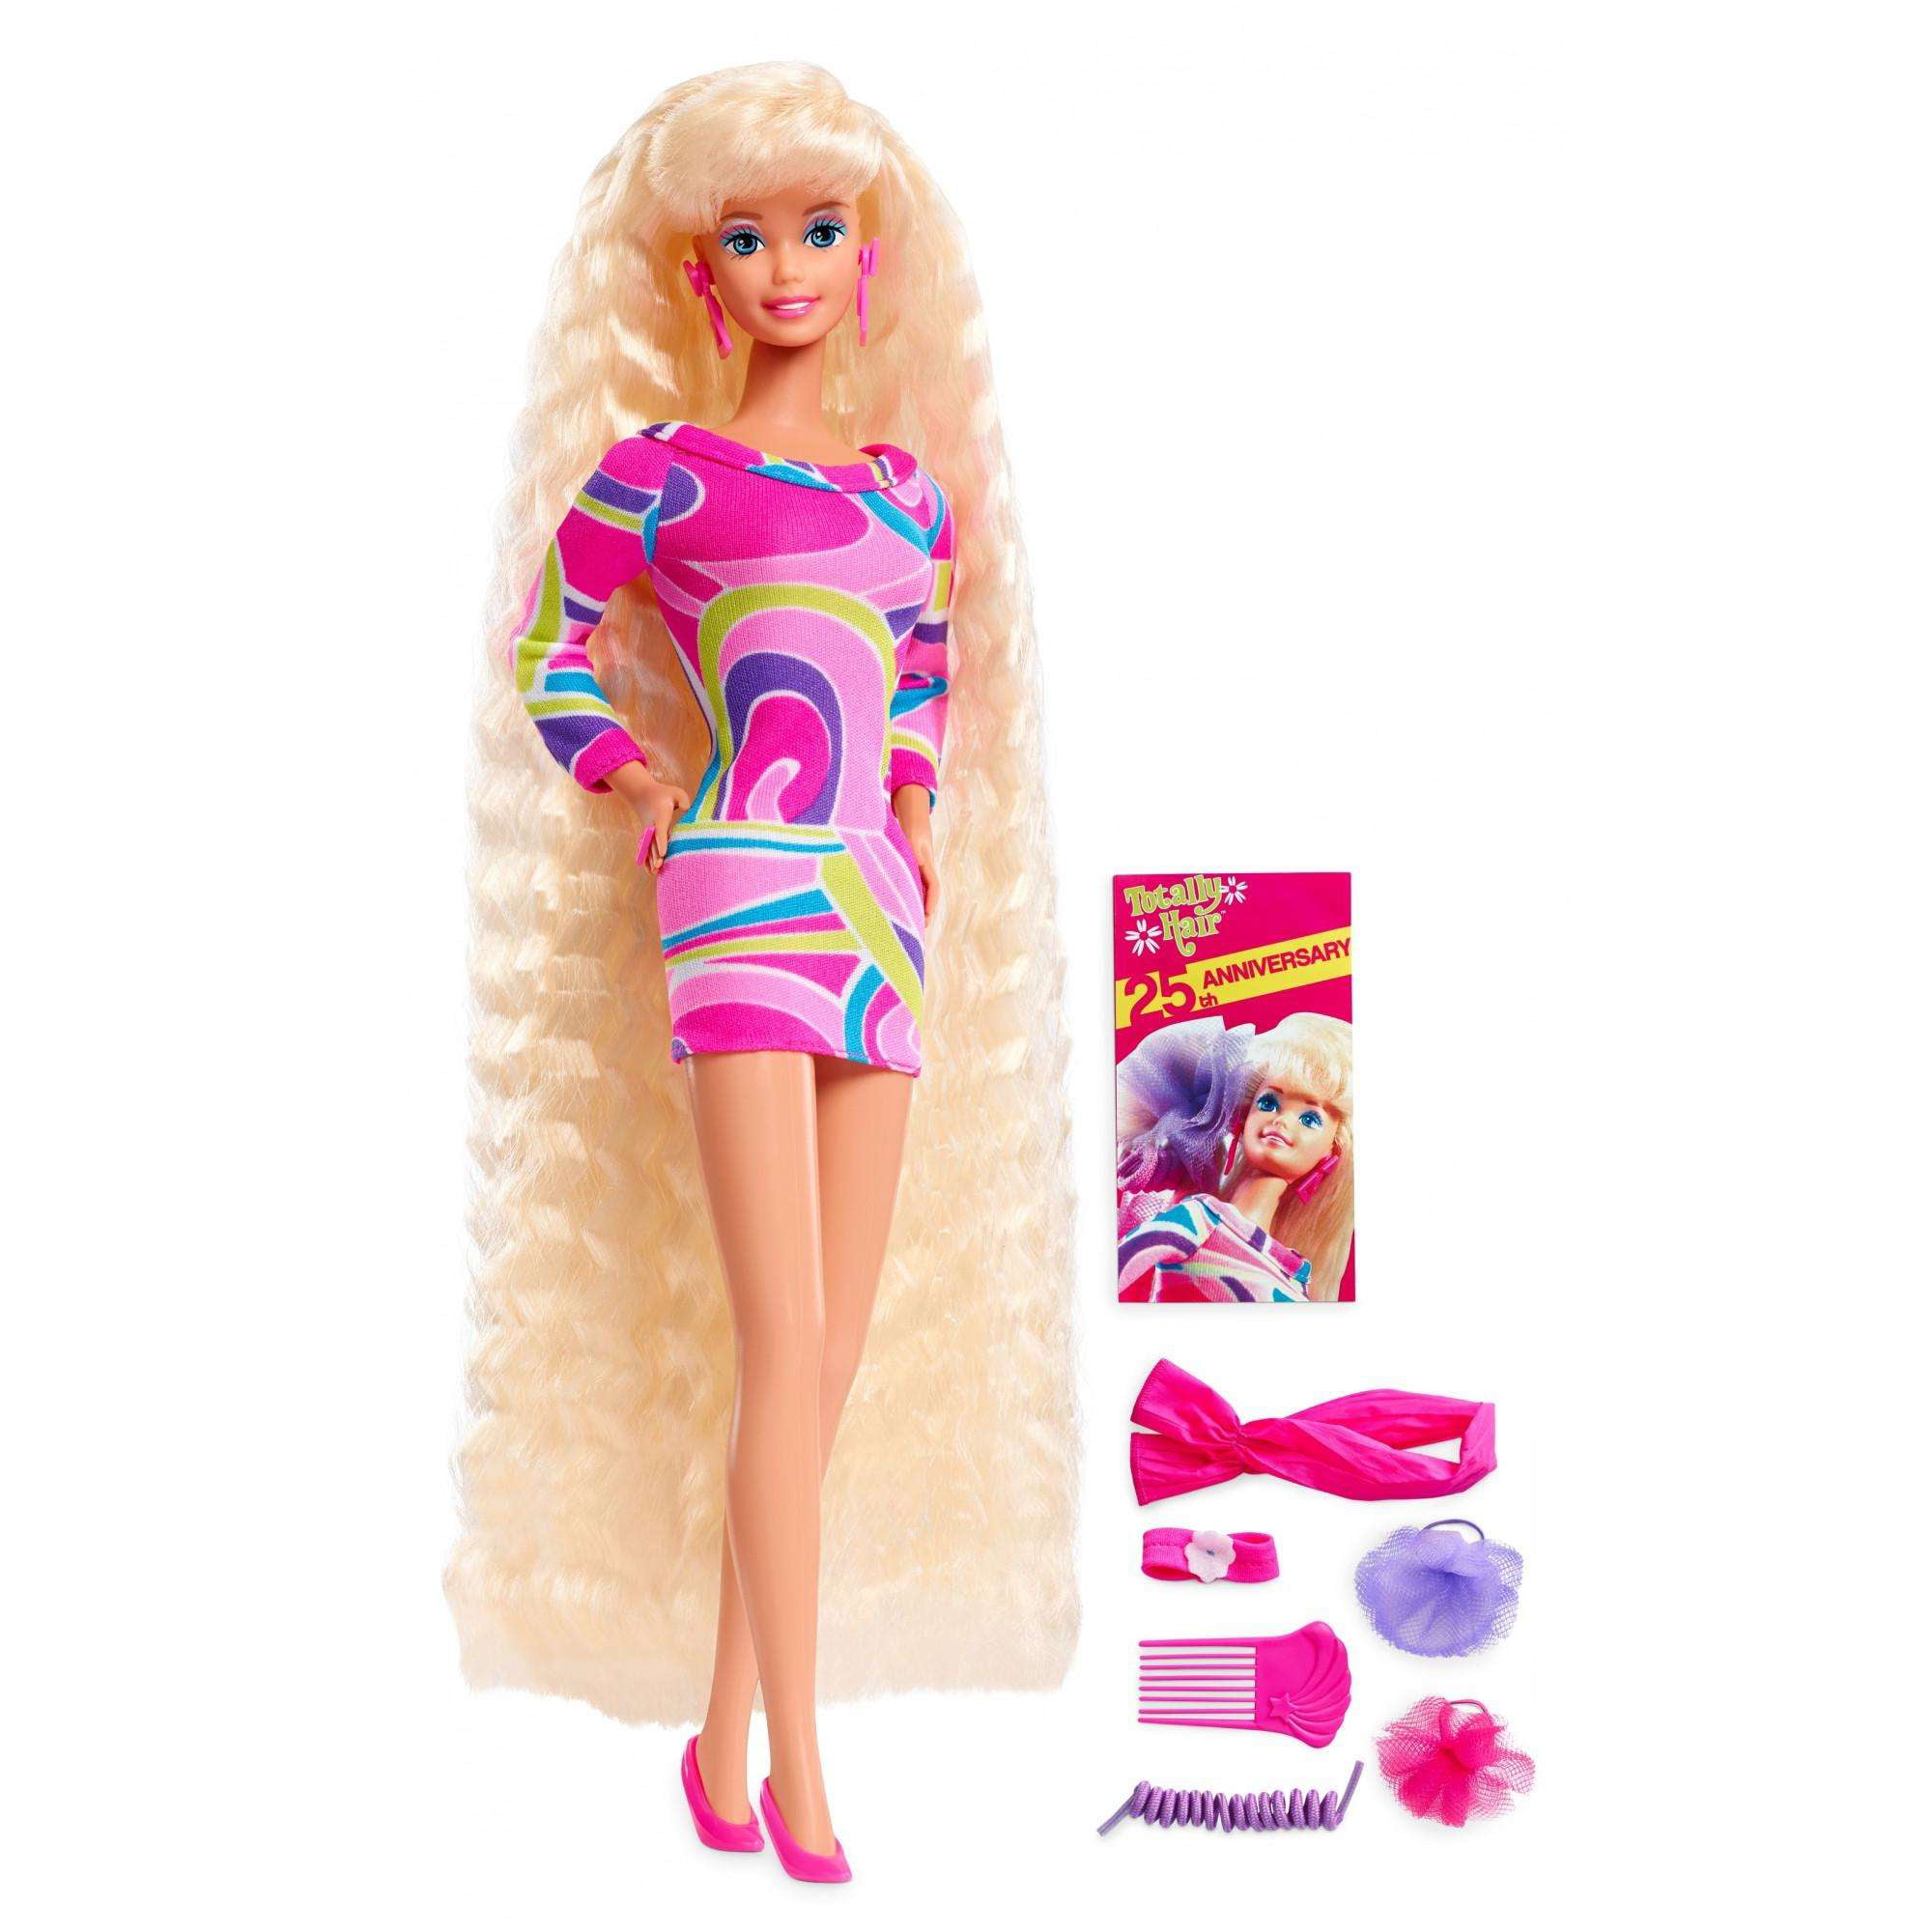 Кукла 500 рублей. Кукла Барби totally hair. Тотали Хейр Барби 2017. Кукла Барби фирмы Маттел. Куклы Барби Маттел коллекционные.